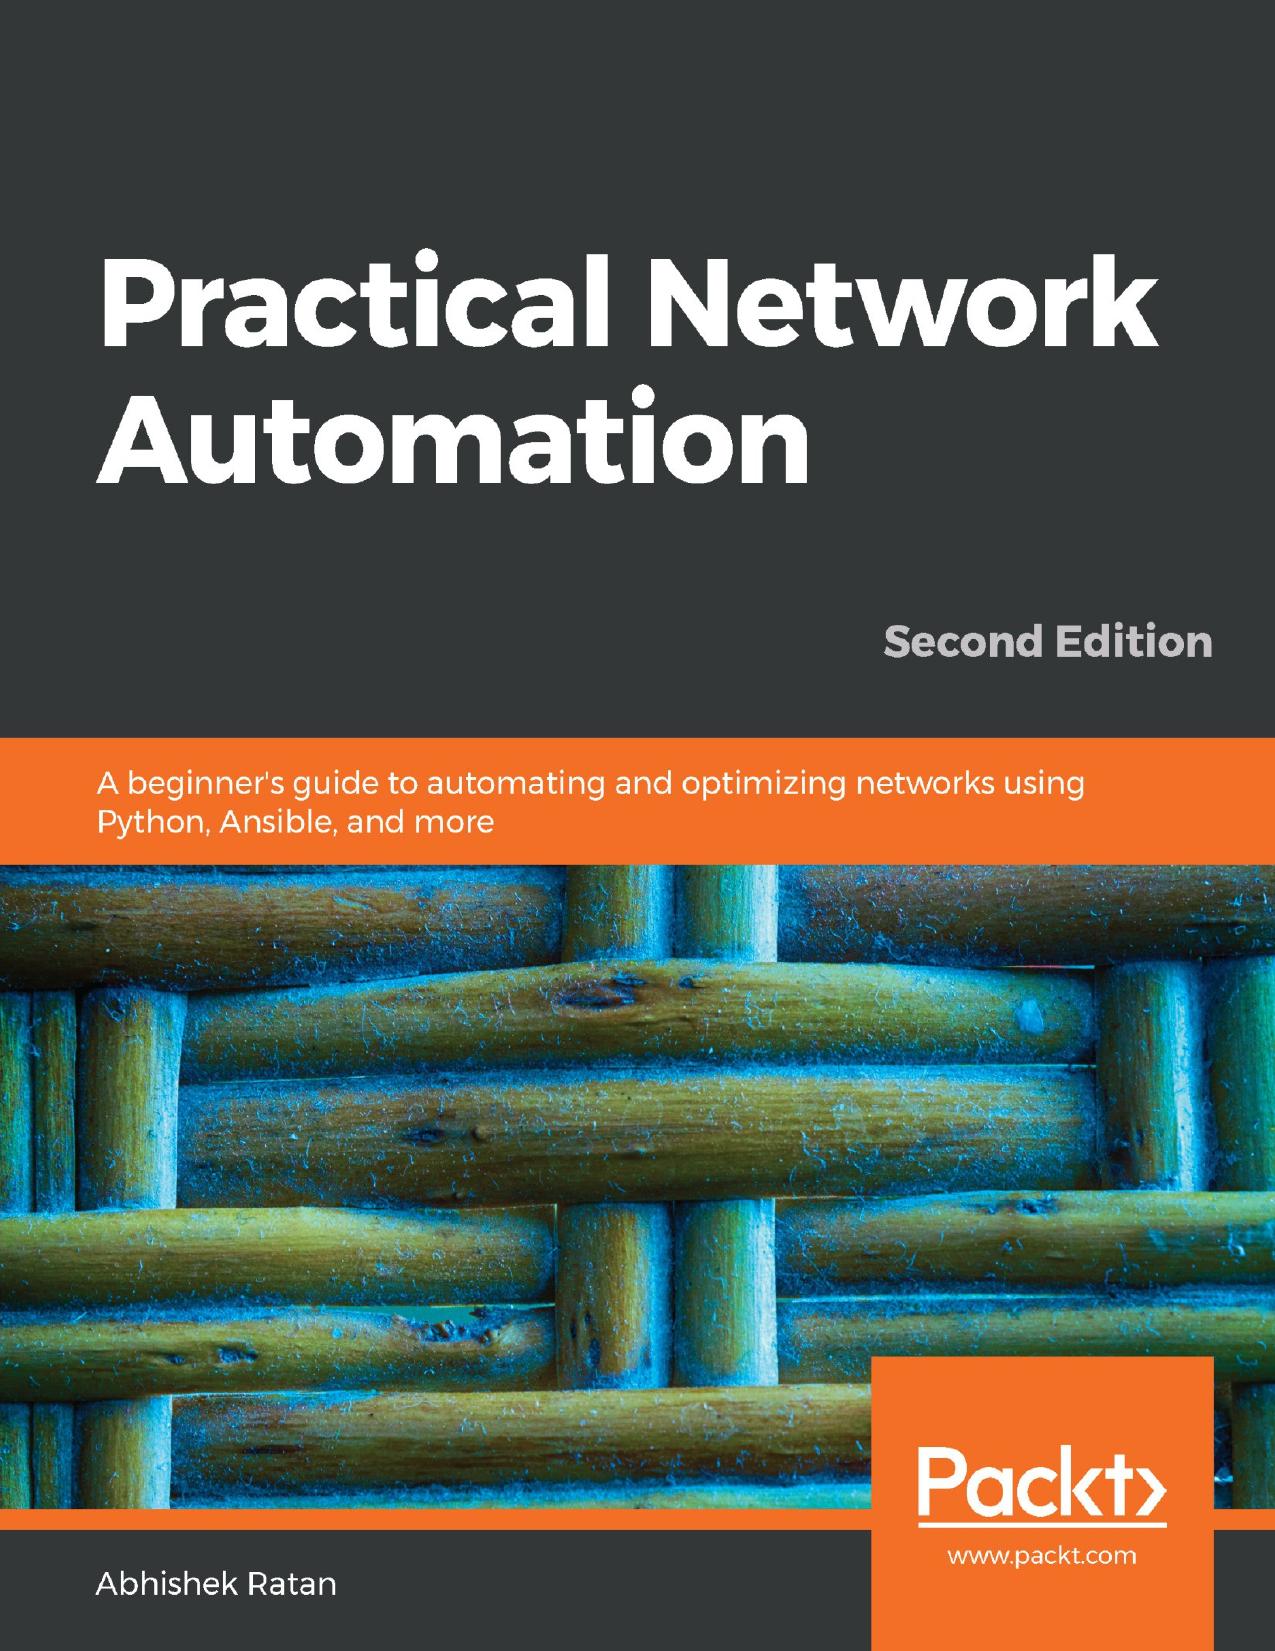 Practical Network Automation - 2nd Second Edition - Abhishek Ratan.jpg